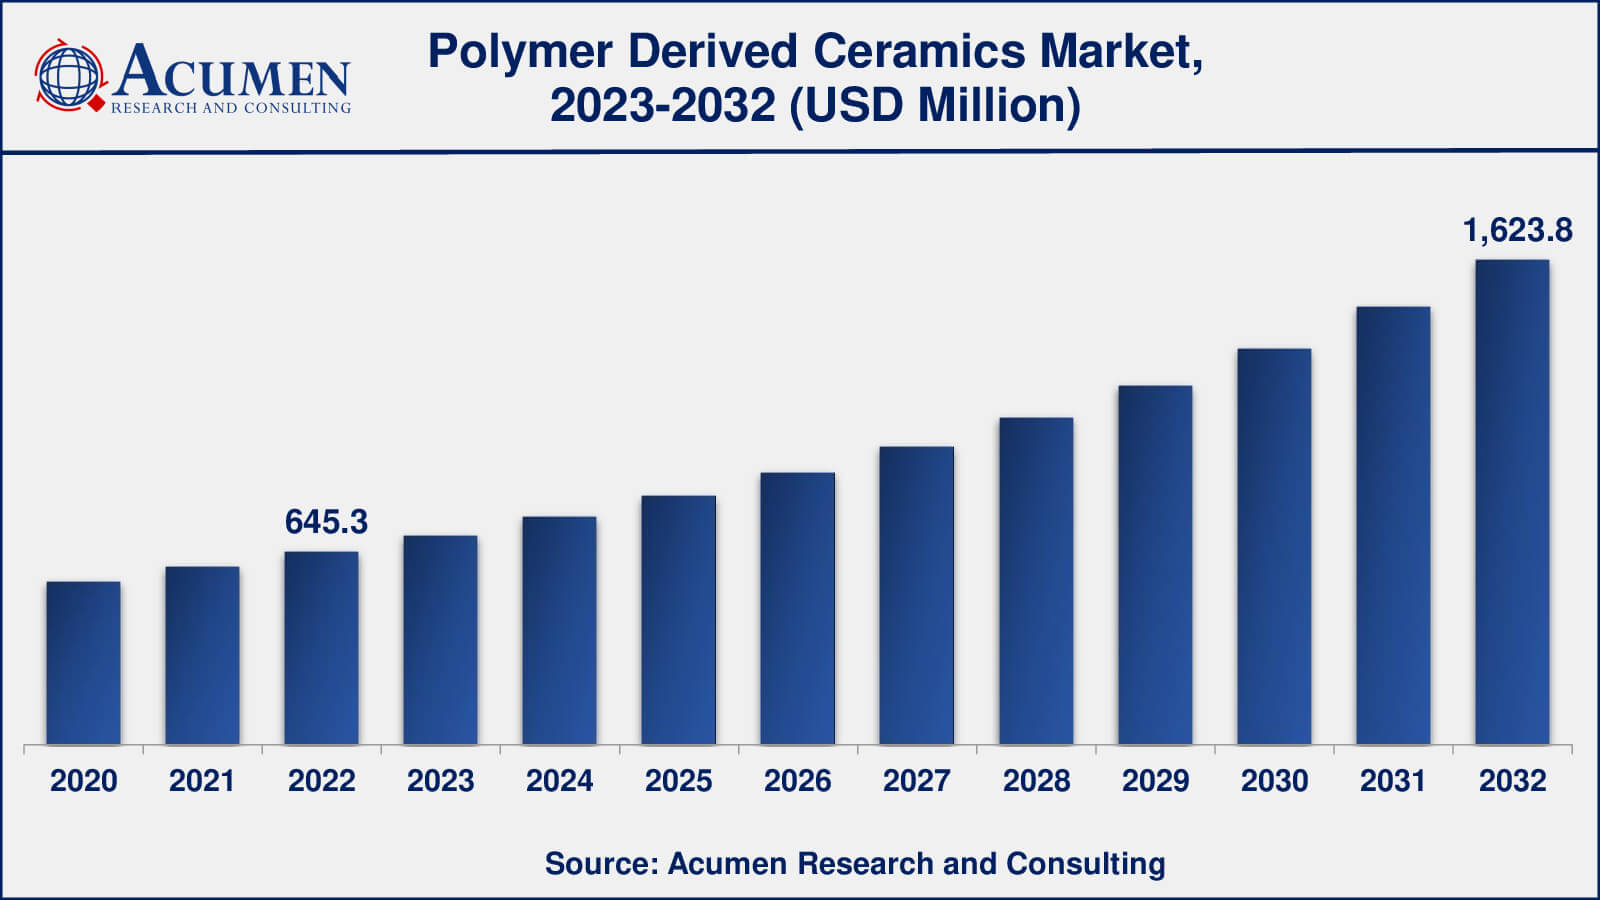 Polymer Derived Ceramics Market Drivers